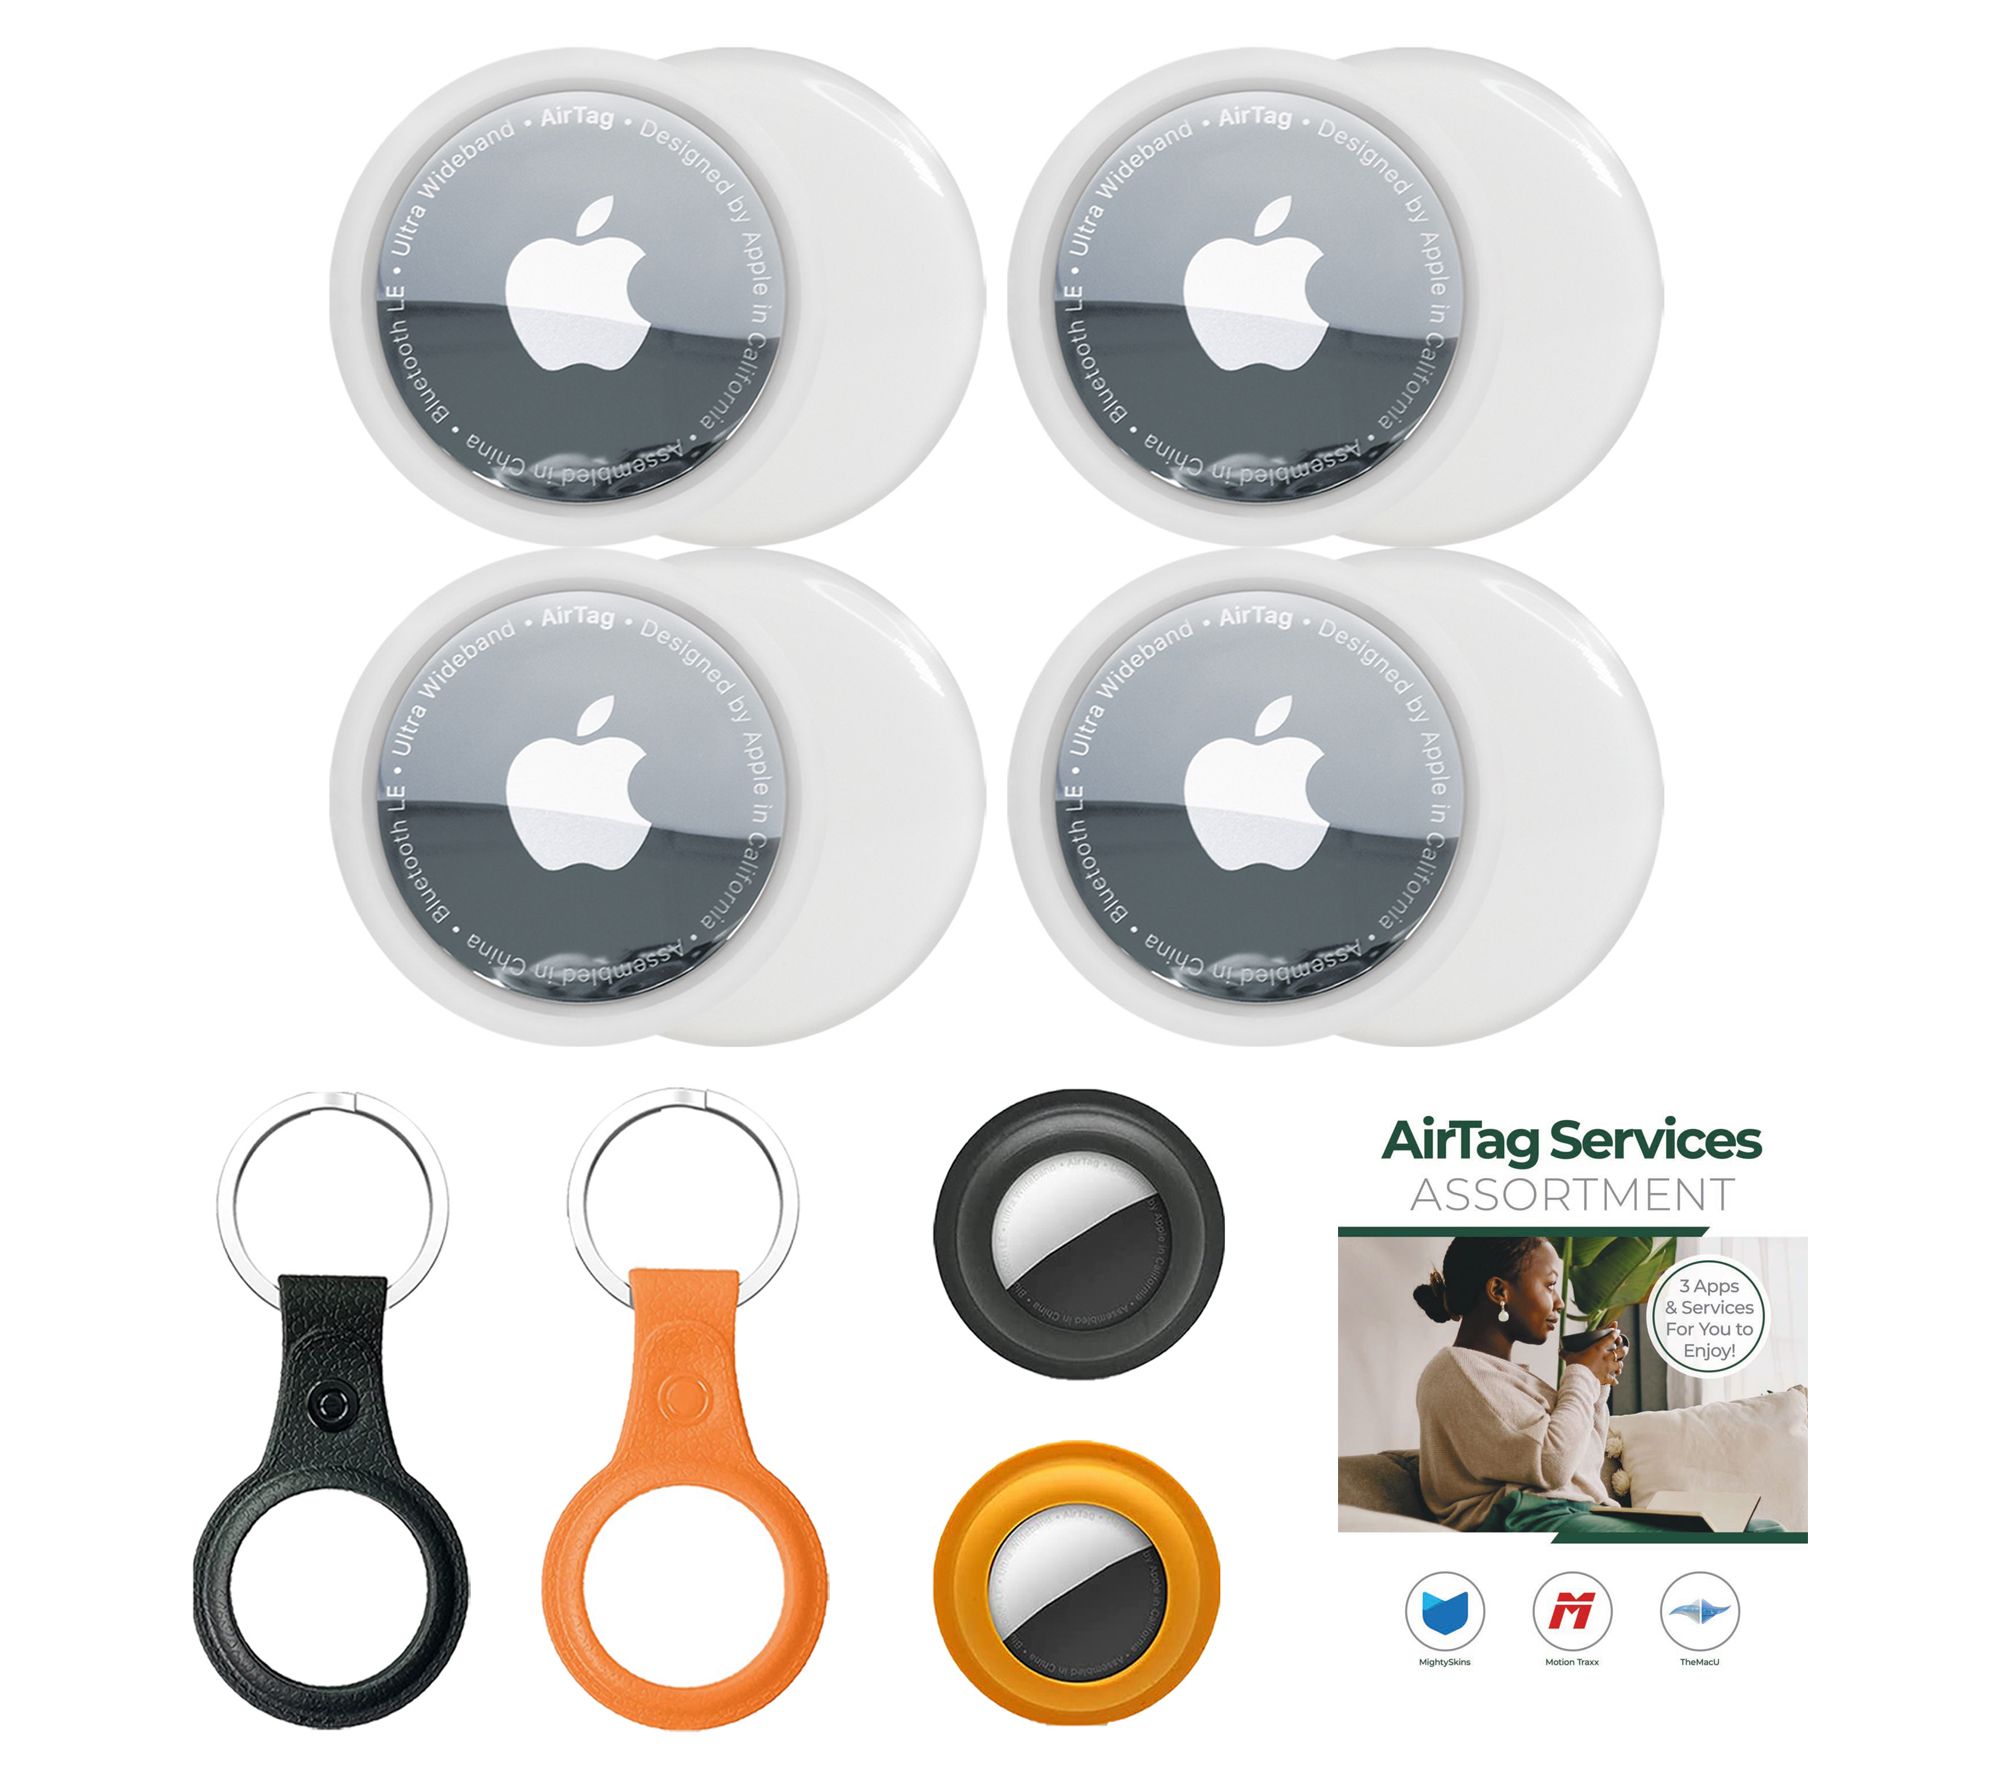 AirTag 4 pack - Apple (CA)